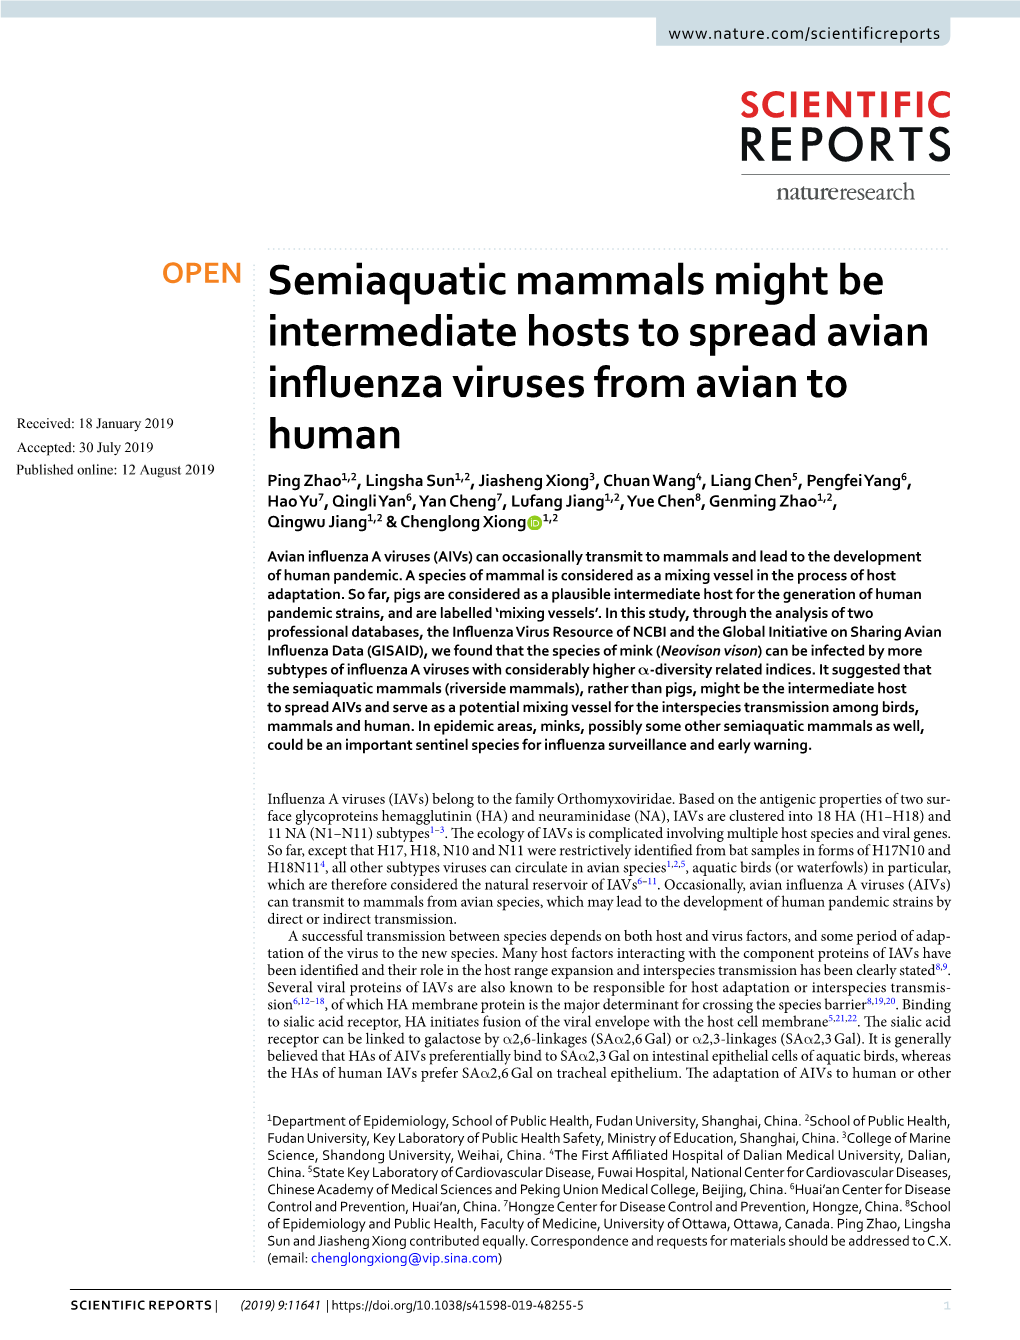 Semiaquatic Mammals Might Be Intermediate Hosts to Spread Avian